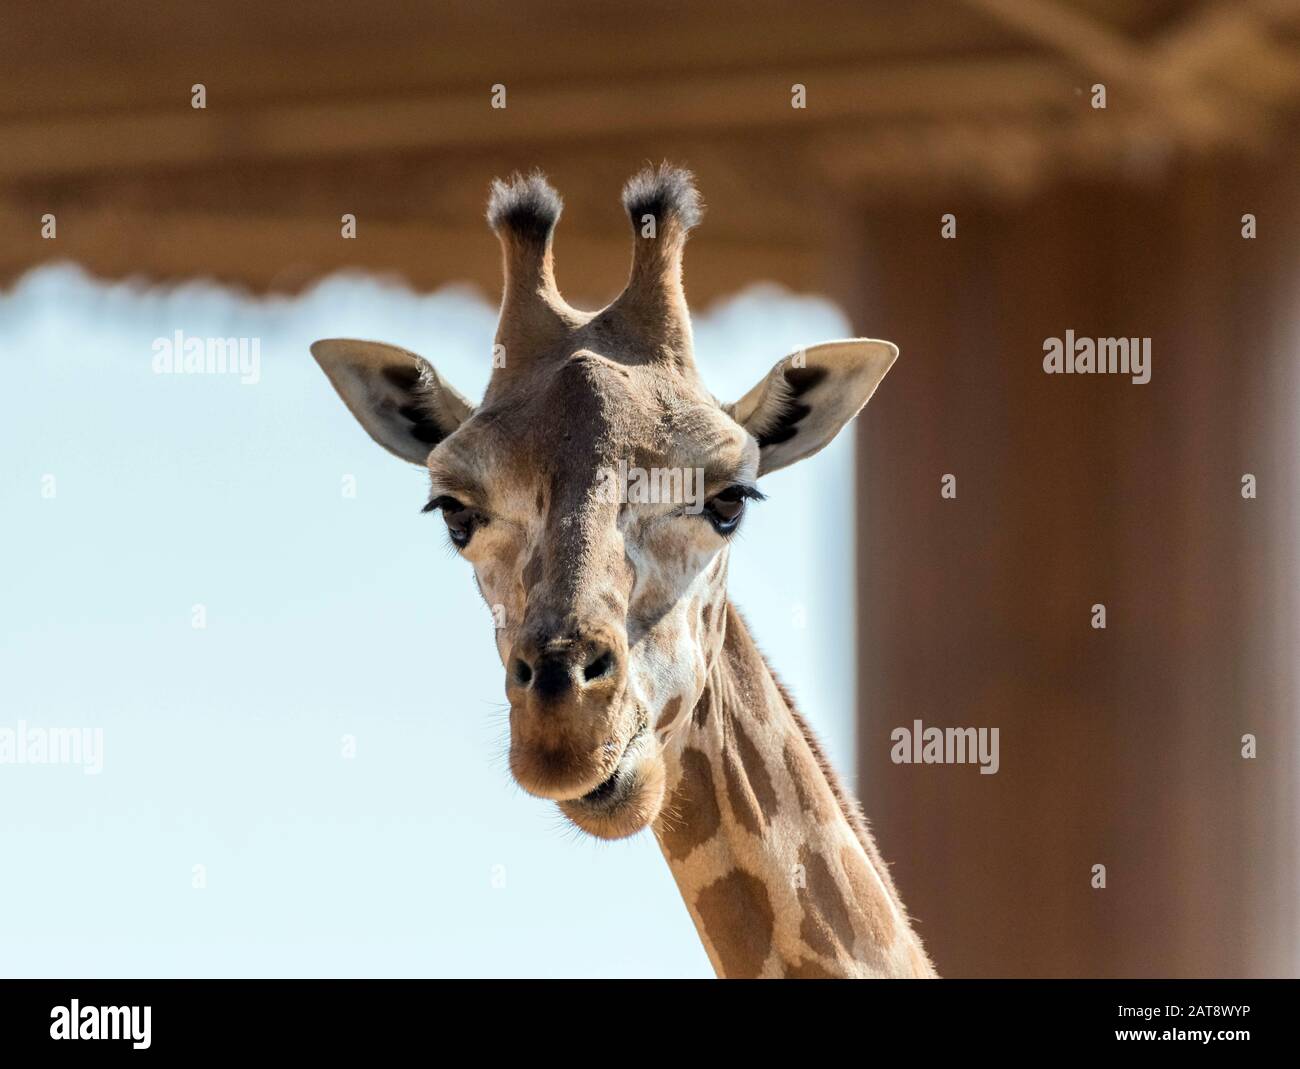 Beautiful wild animal tall Giraffe in Al Ain Zoo Safari Park, United Arab Emirates Stock Photo